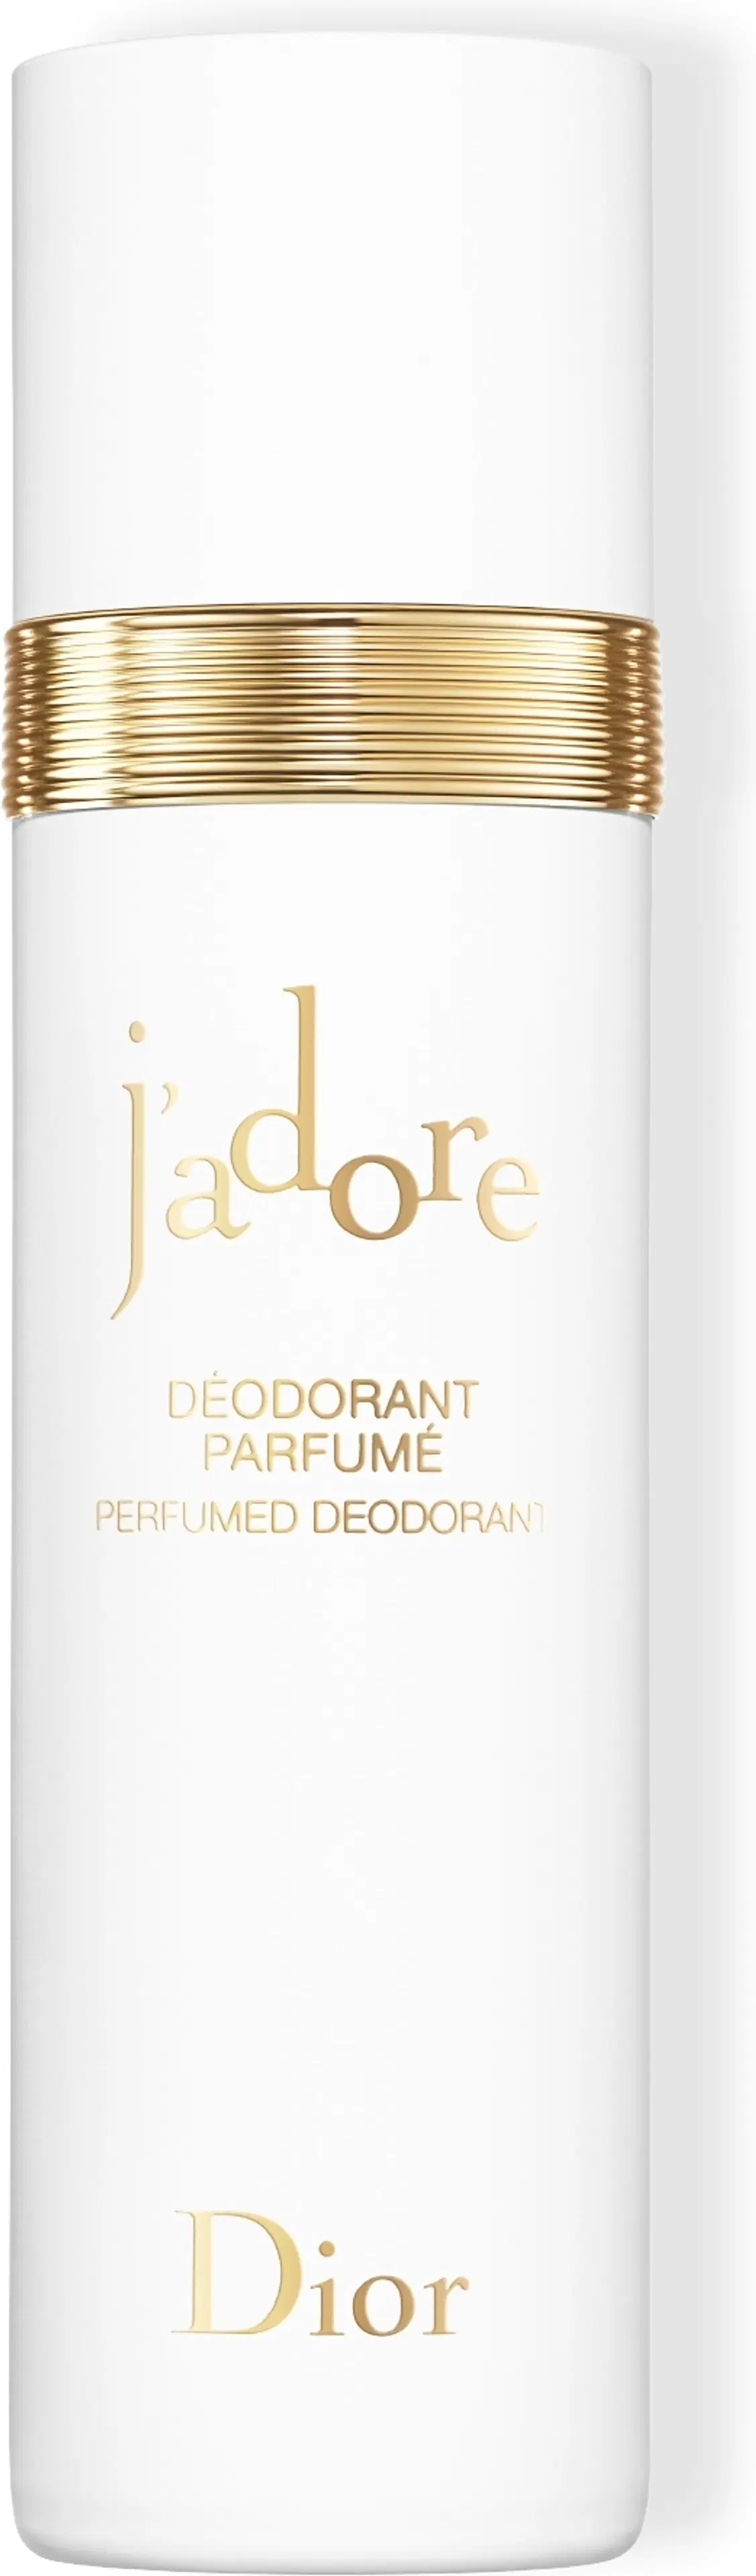 DIOR J'adore Perfumed Deodorant 100 ml